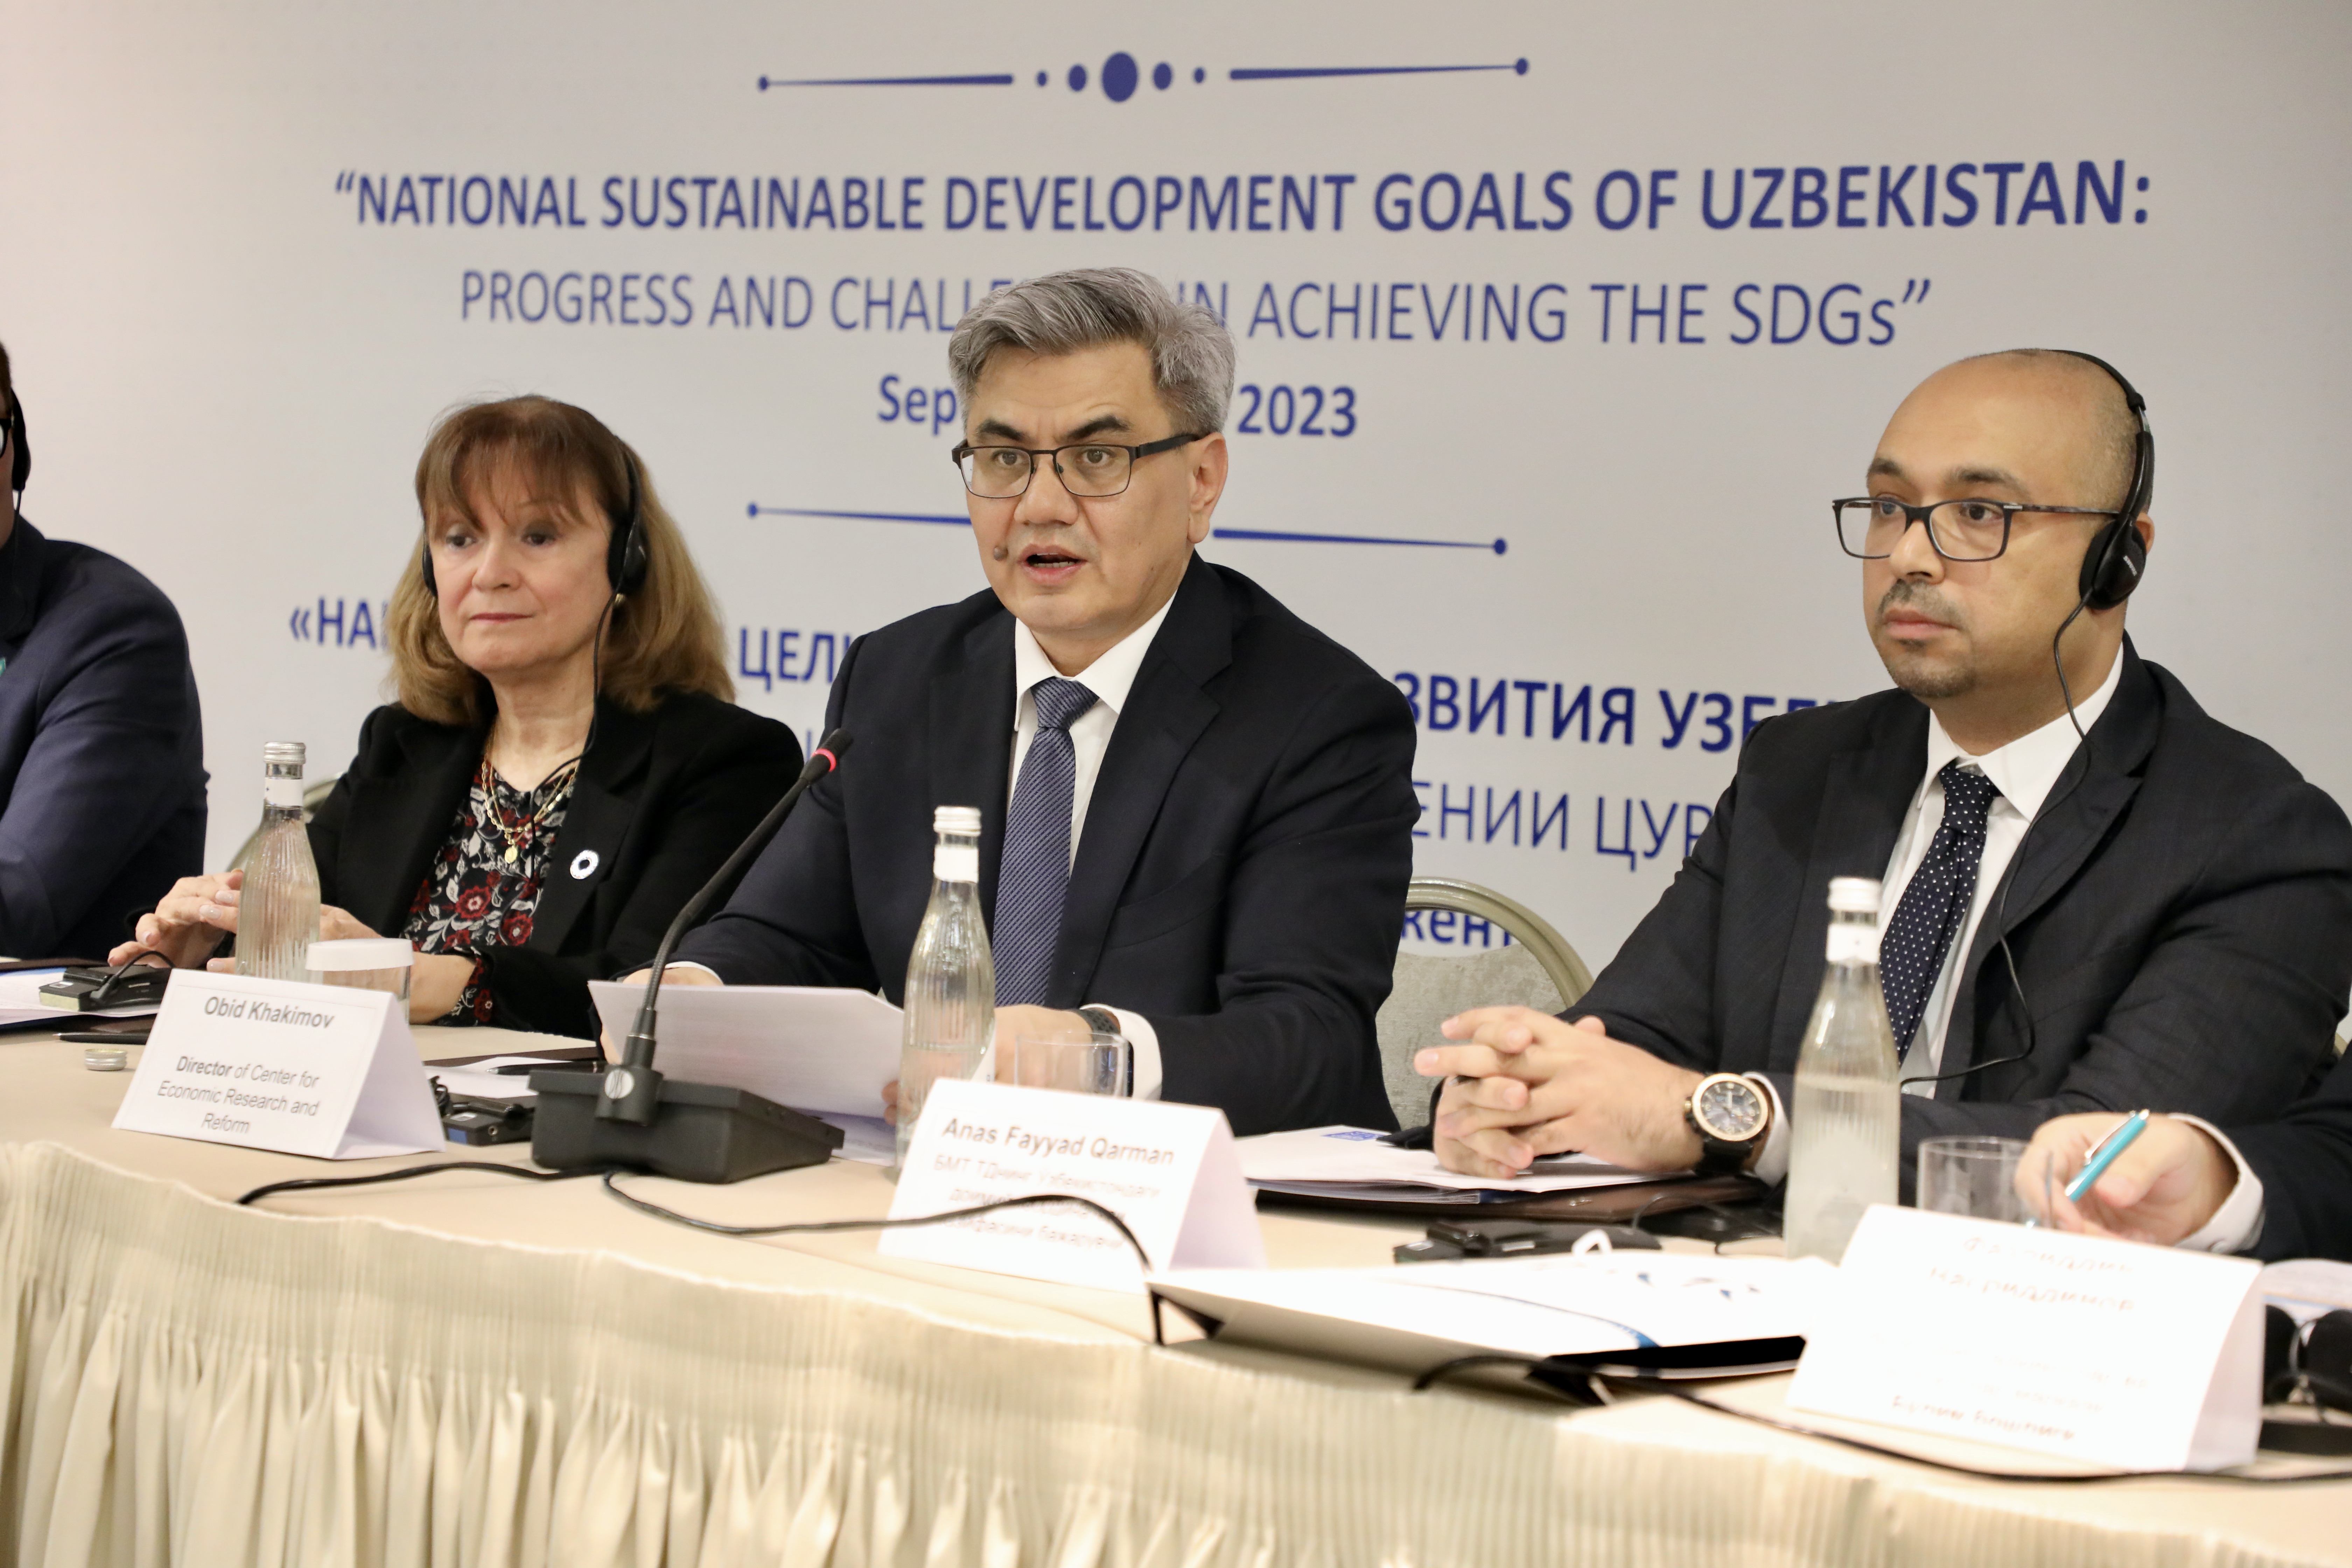 Uzbekistan's National Sustainable Development Goals: Progress and  Challenges in Achieving the SDGs